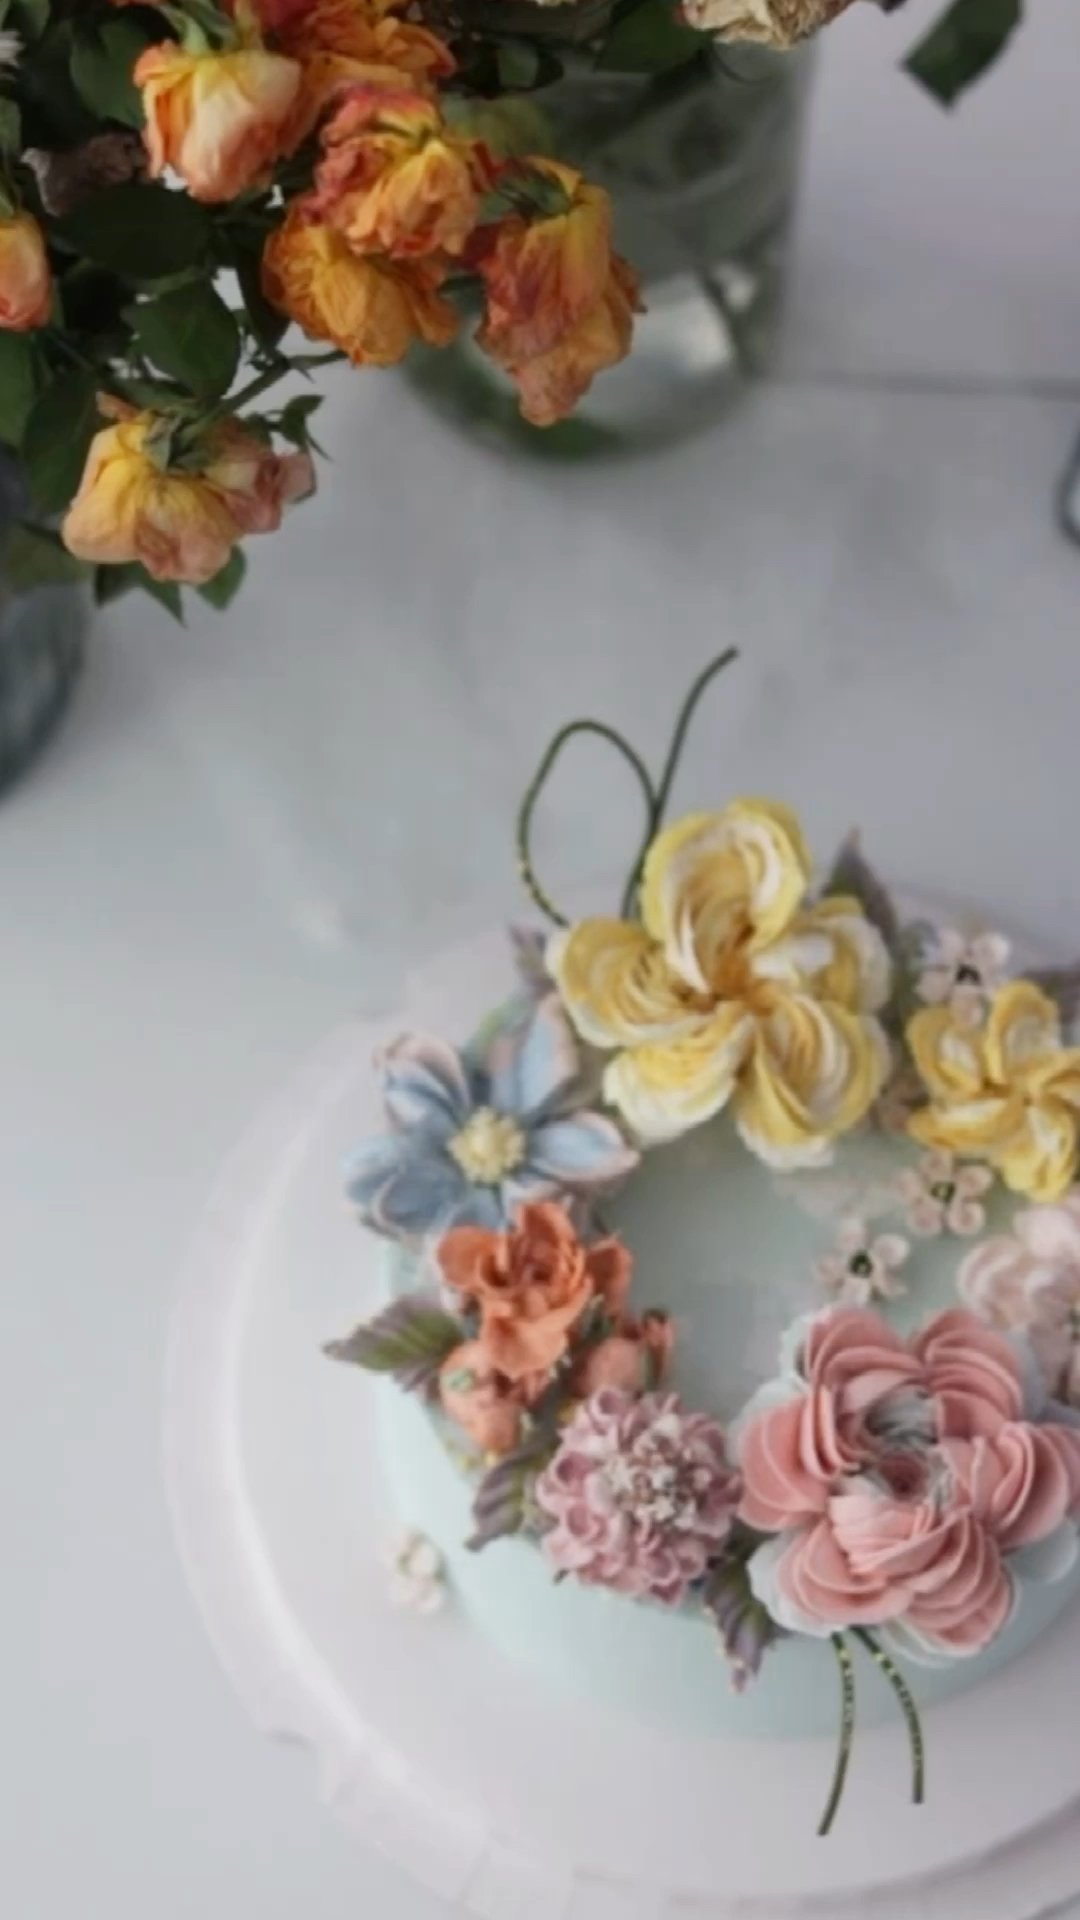 colorful奶油霜裱花蛋糕